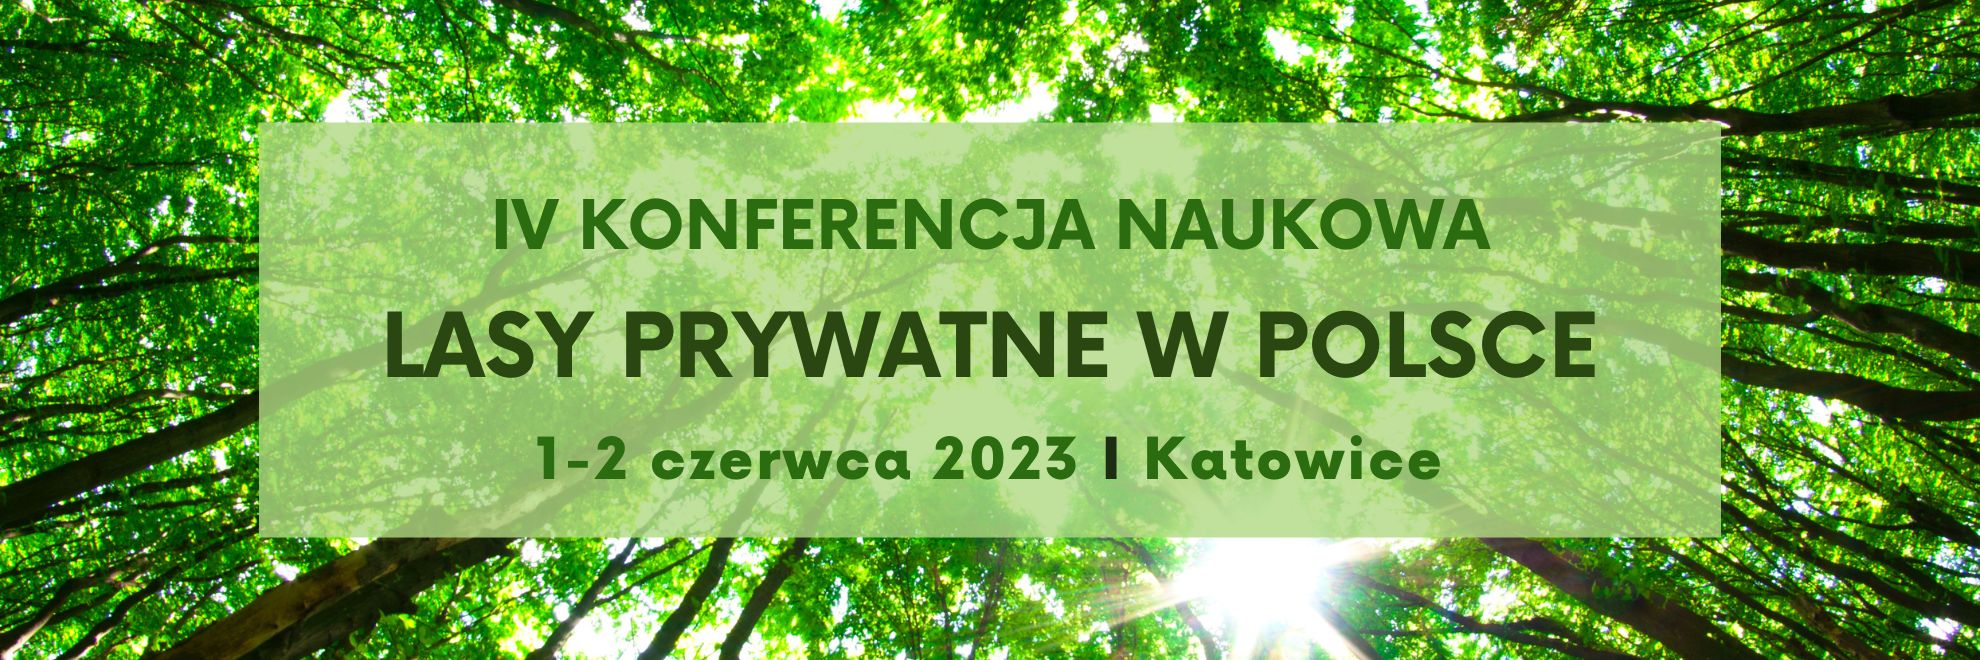 Lasy prywatne w Polsce 2023